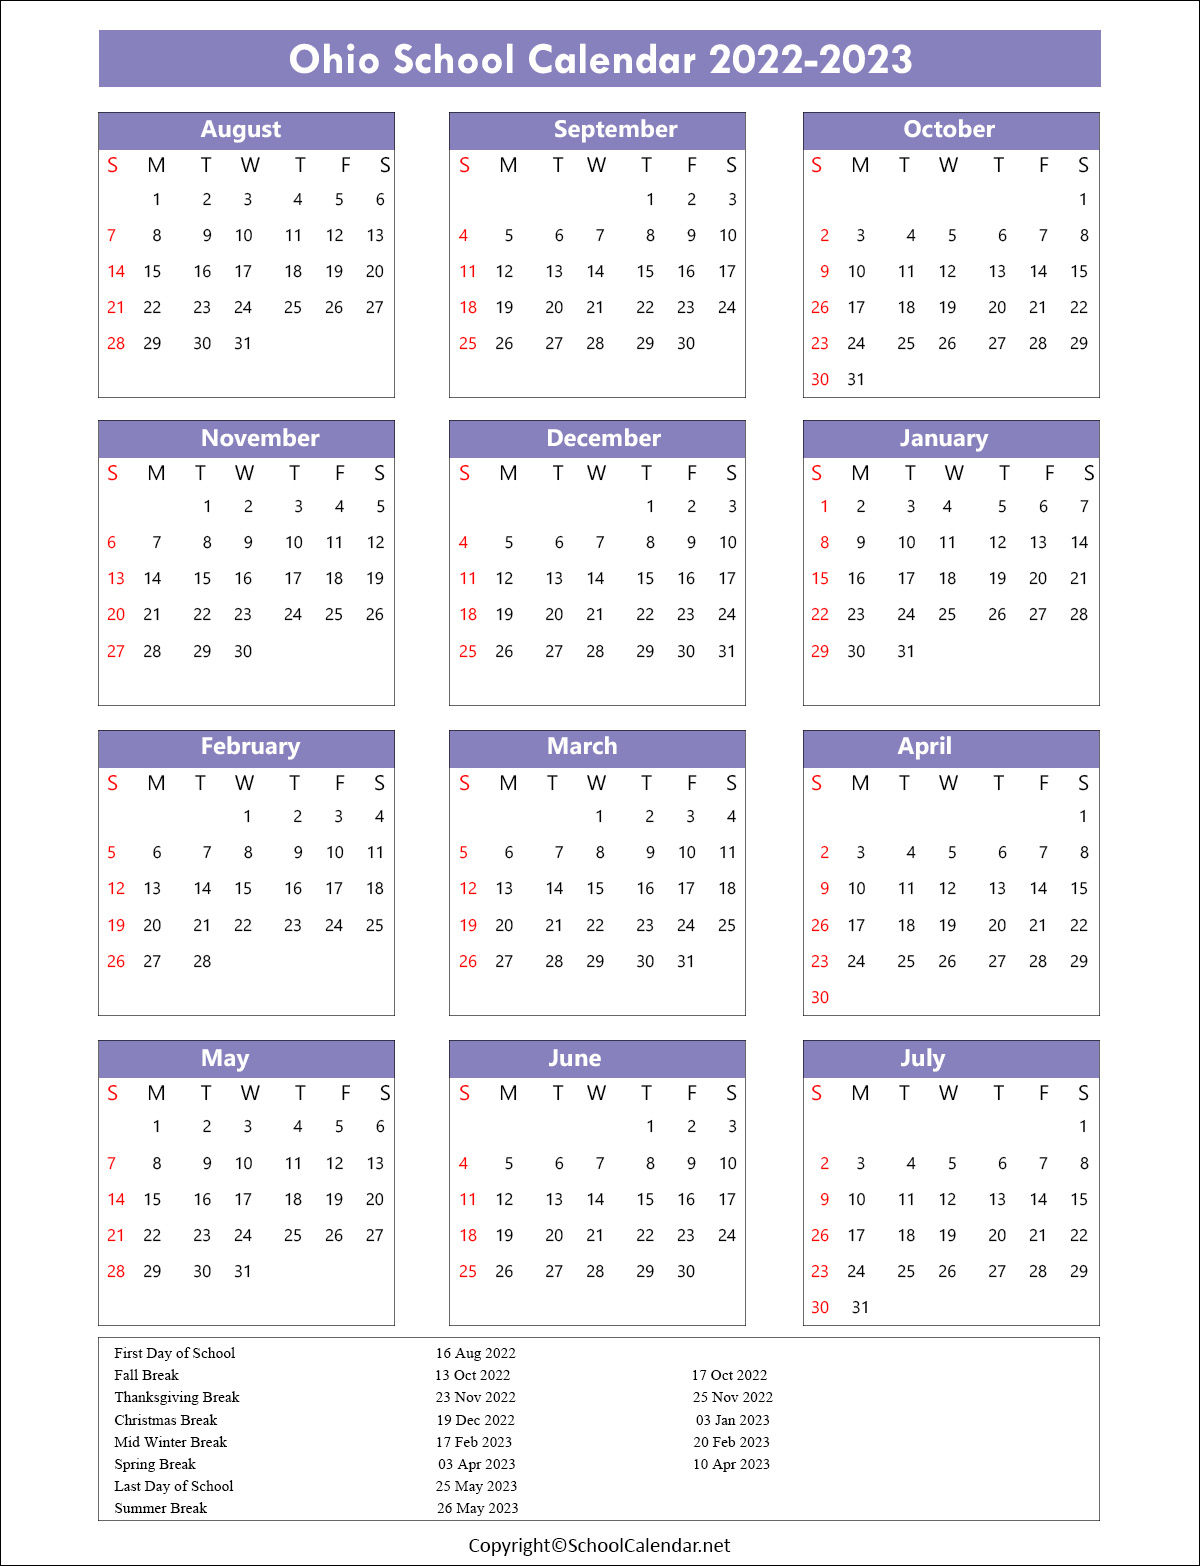 Ohio School Calendar 2022